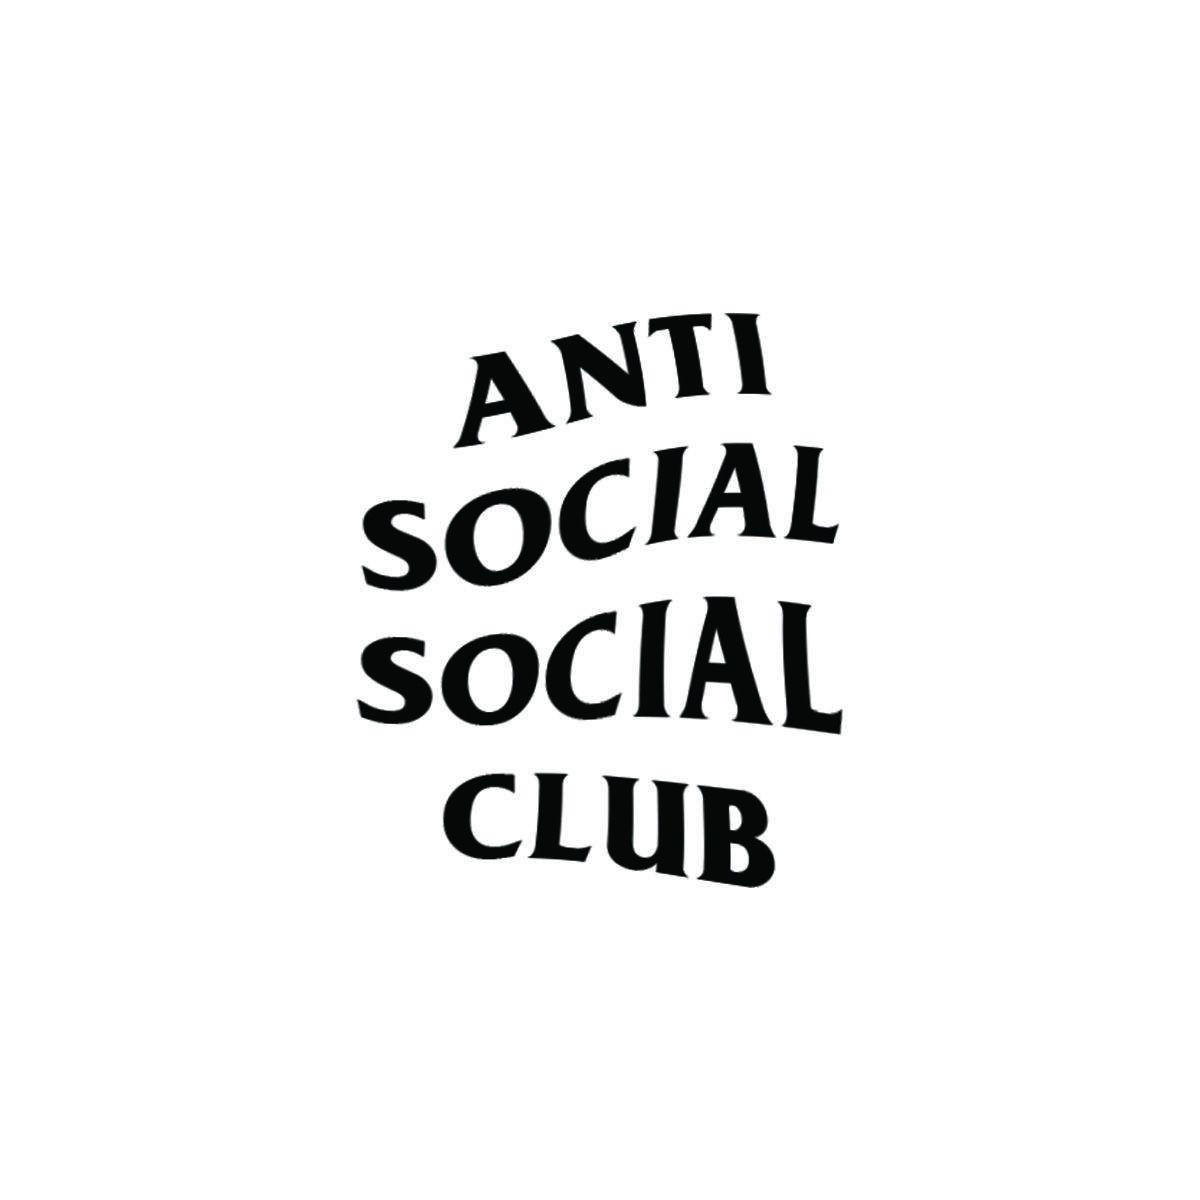 ANTI SOCIAL SOCIAL CLUB. Hypebeast wallpaper, Hype